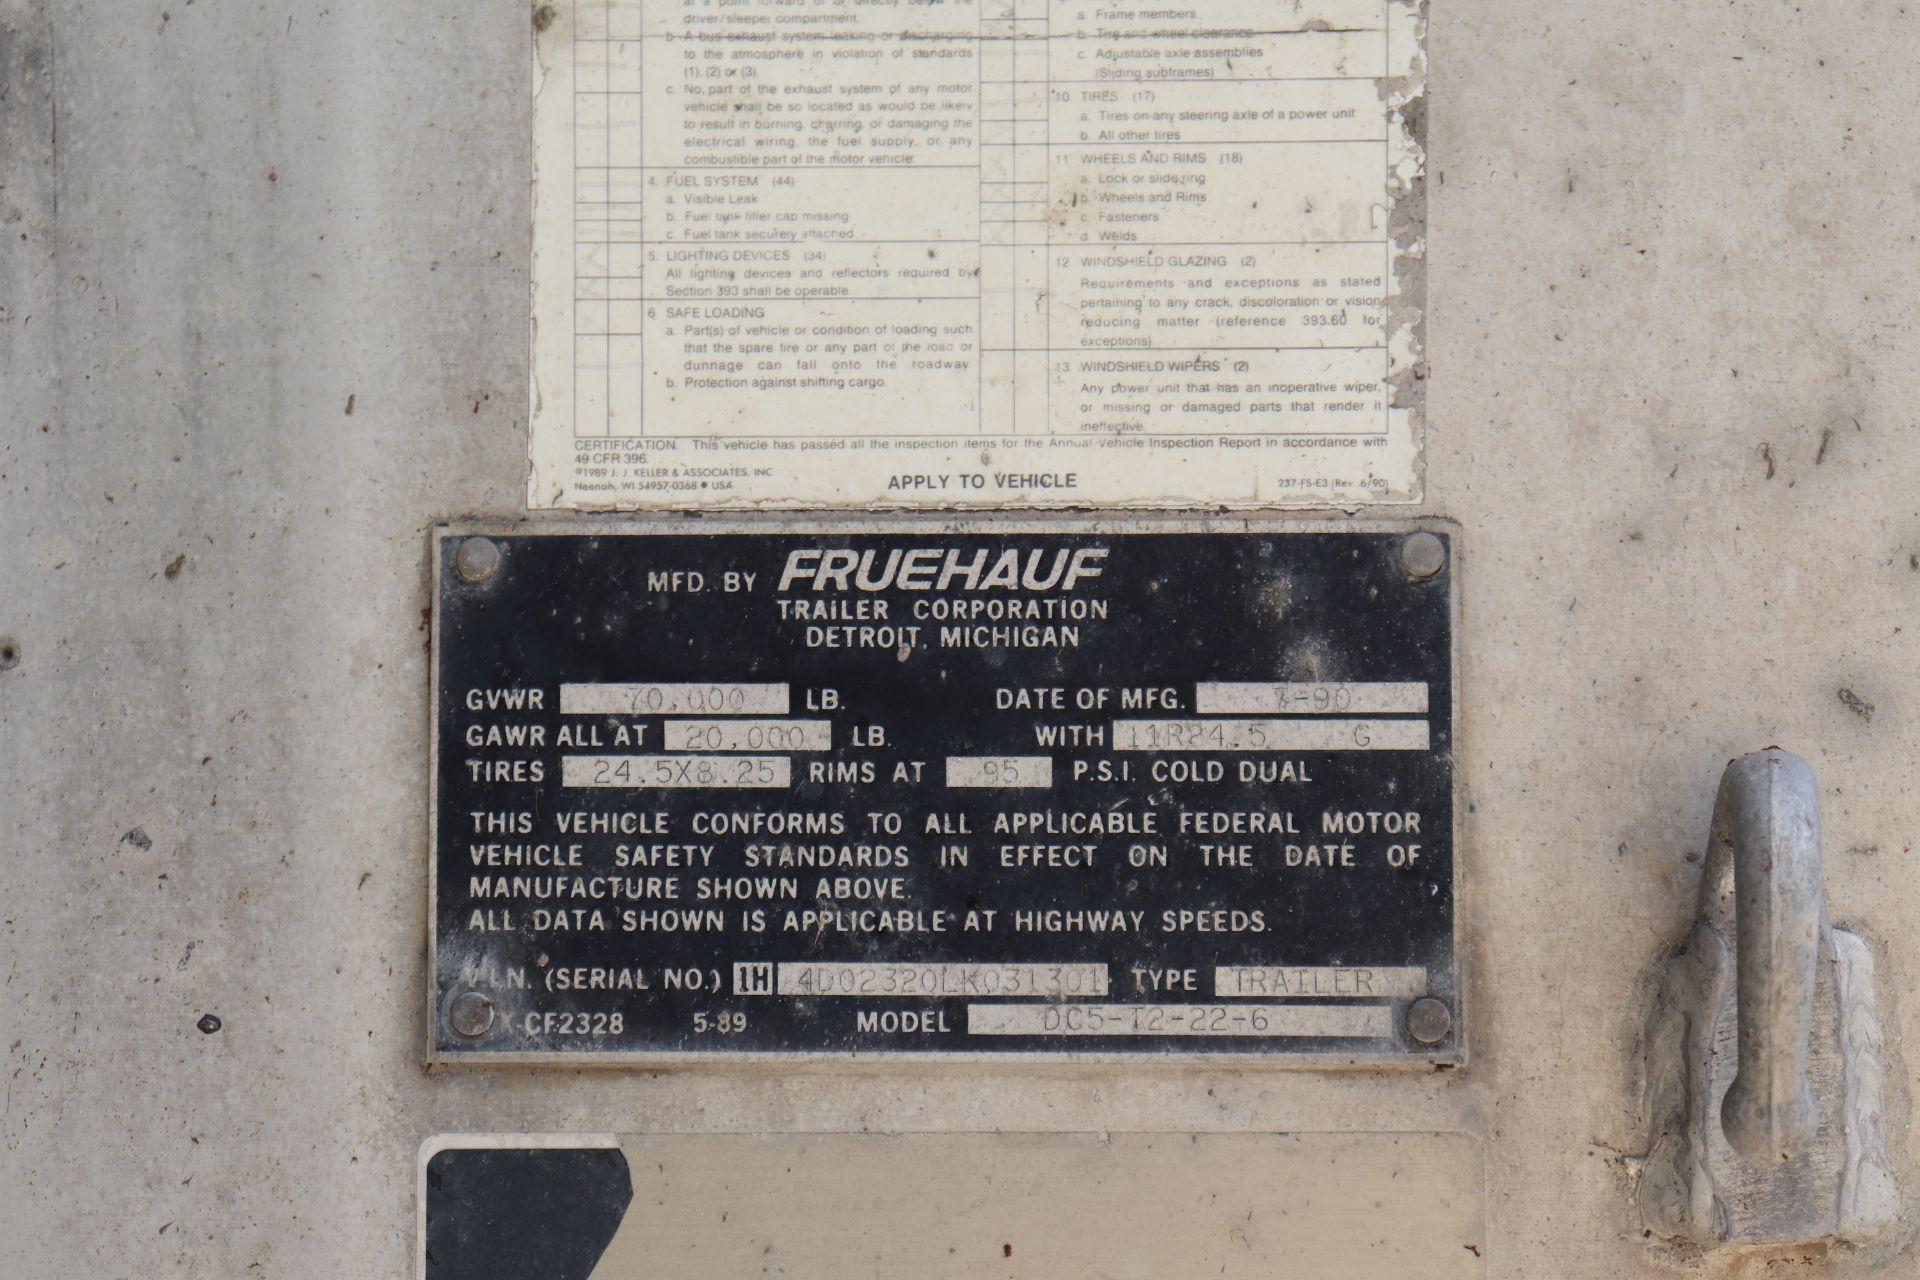 1990 Fruehauf dump trailer, VIN #1H4D02320LK031301 - Image 11 of 11